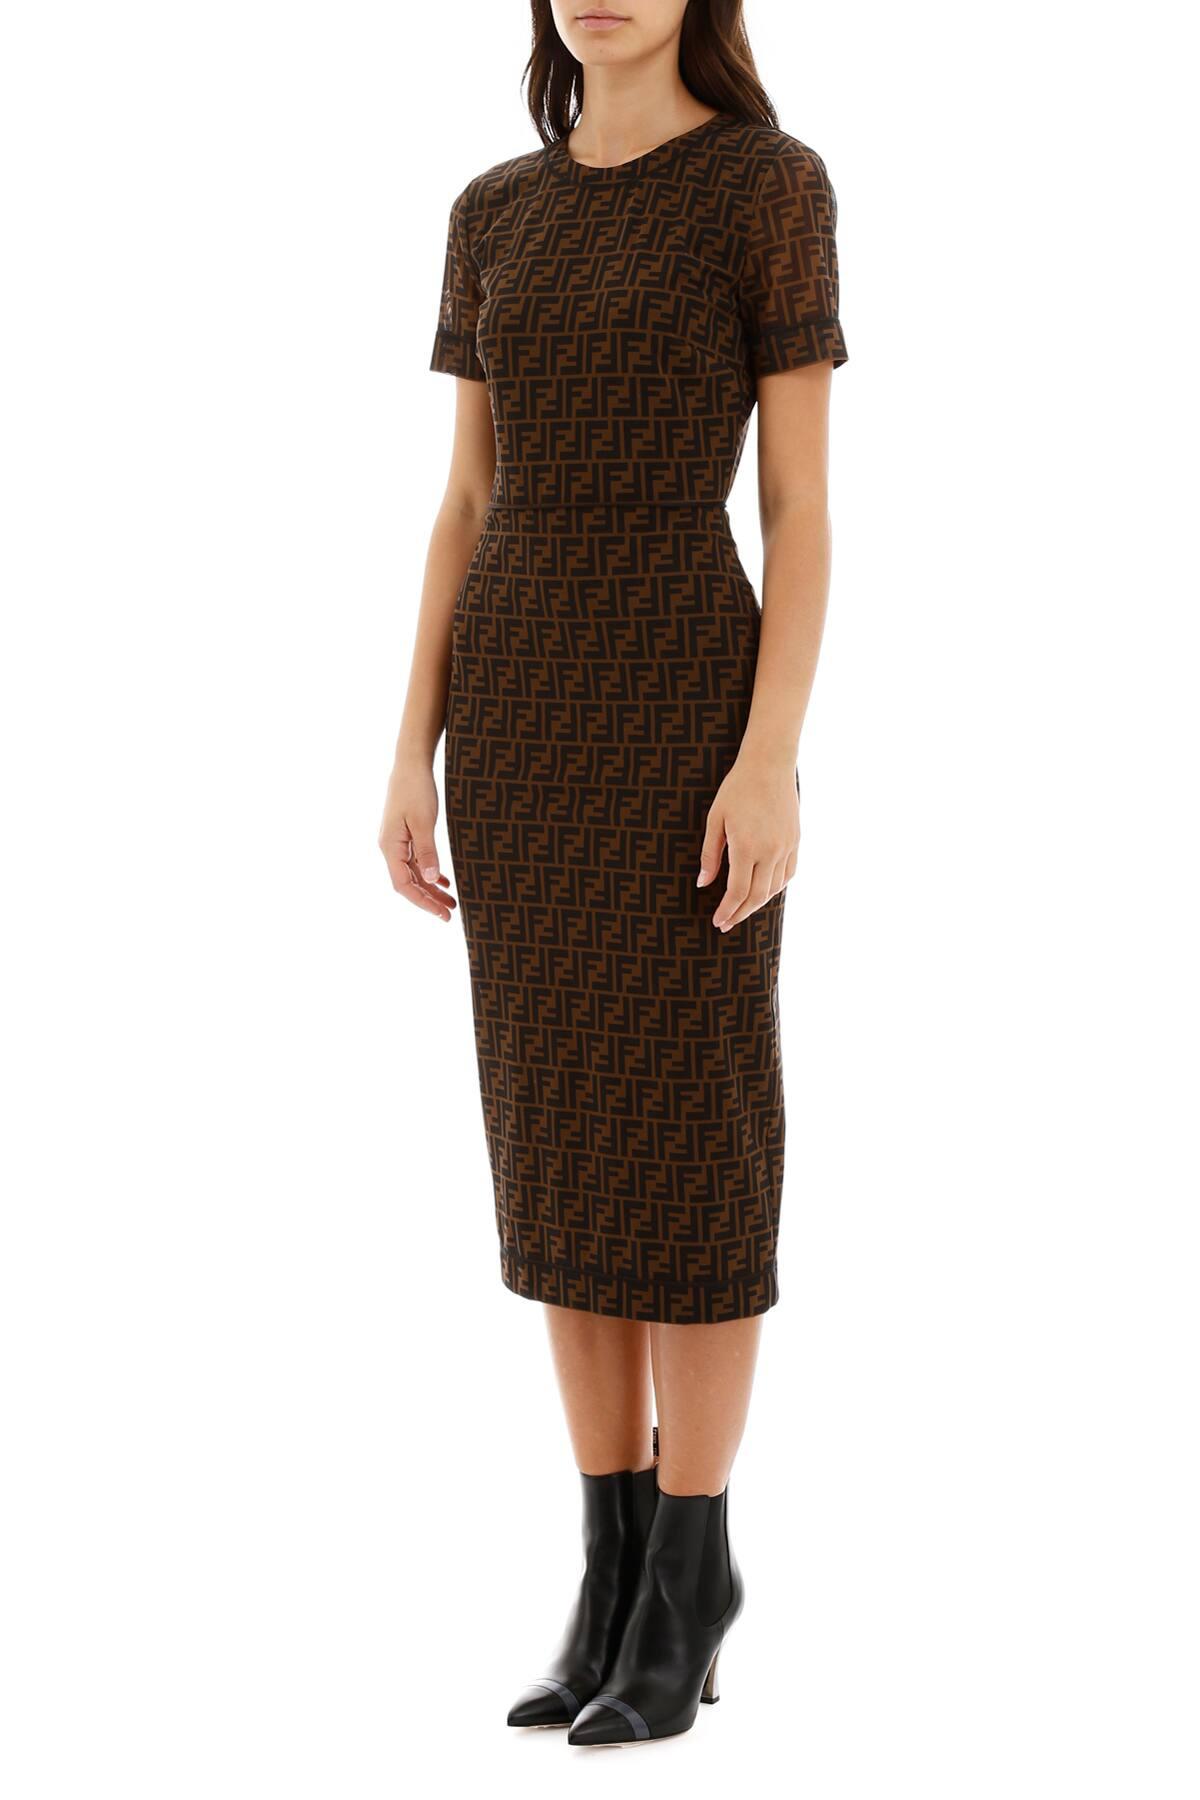 Fendi Ff Print Dress in Brown,Black 